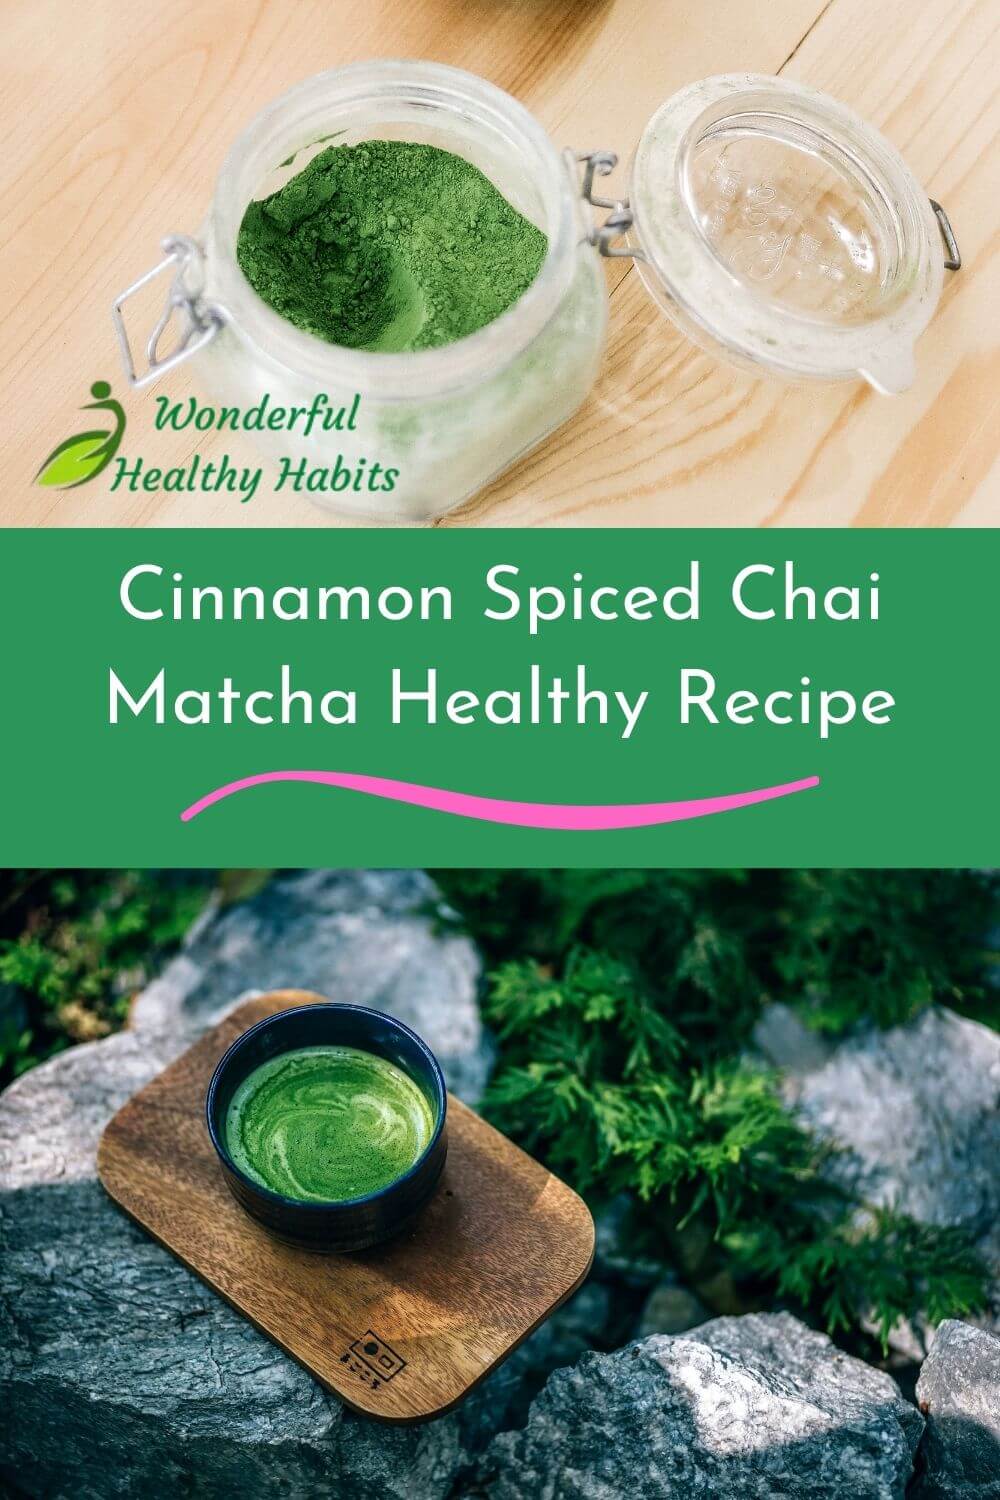 Cinnamon Spiced Chai Matcha Healthy Recipe